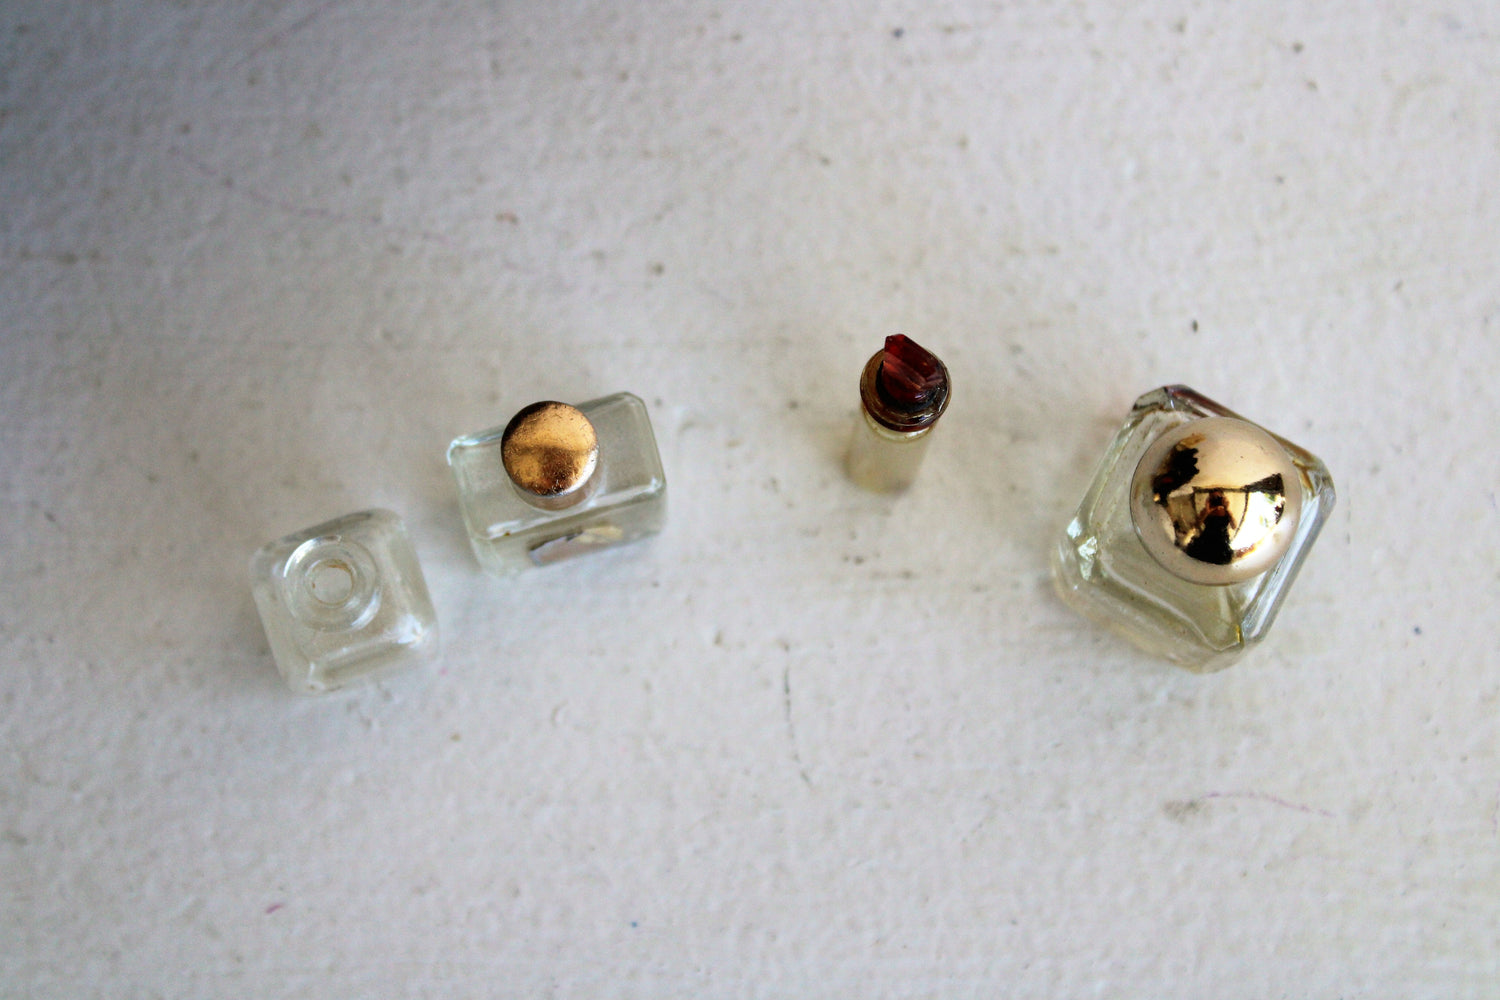 Vintage Perfume Bottles, L'elu Marquay, Emeraude, Pavlova, Etc, Sample Size Fragrance